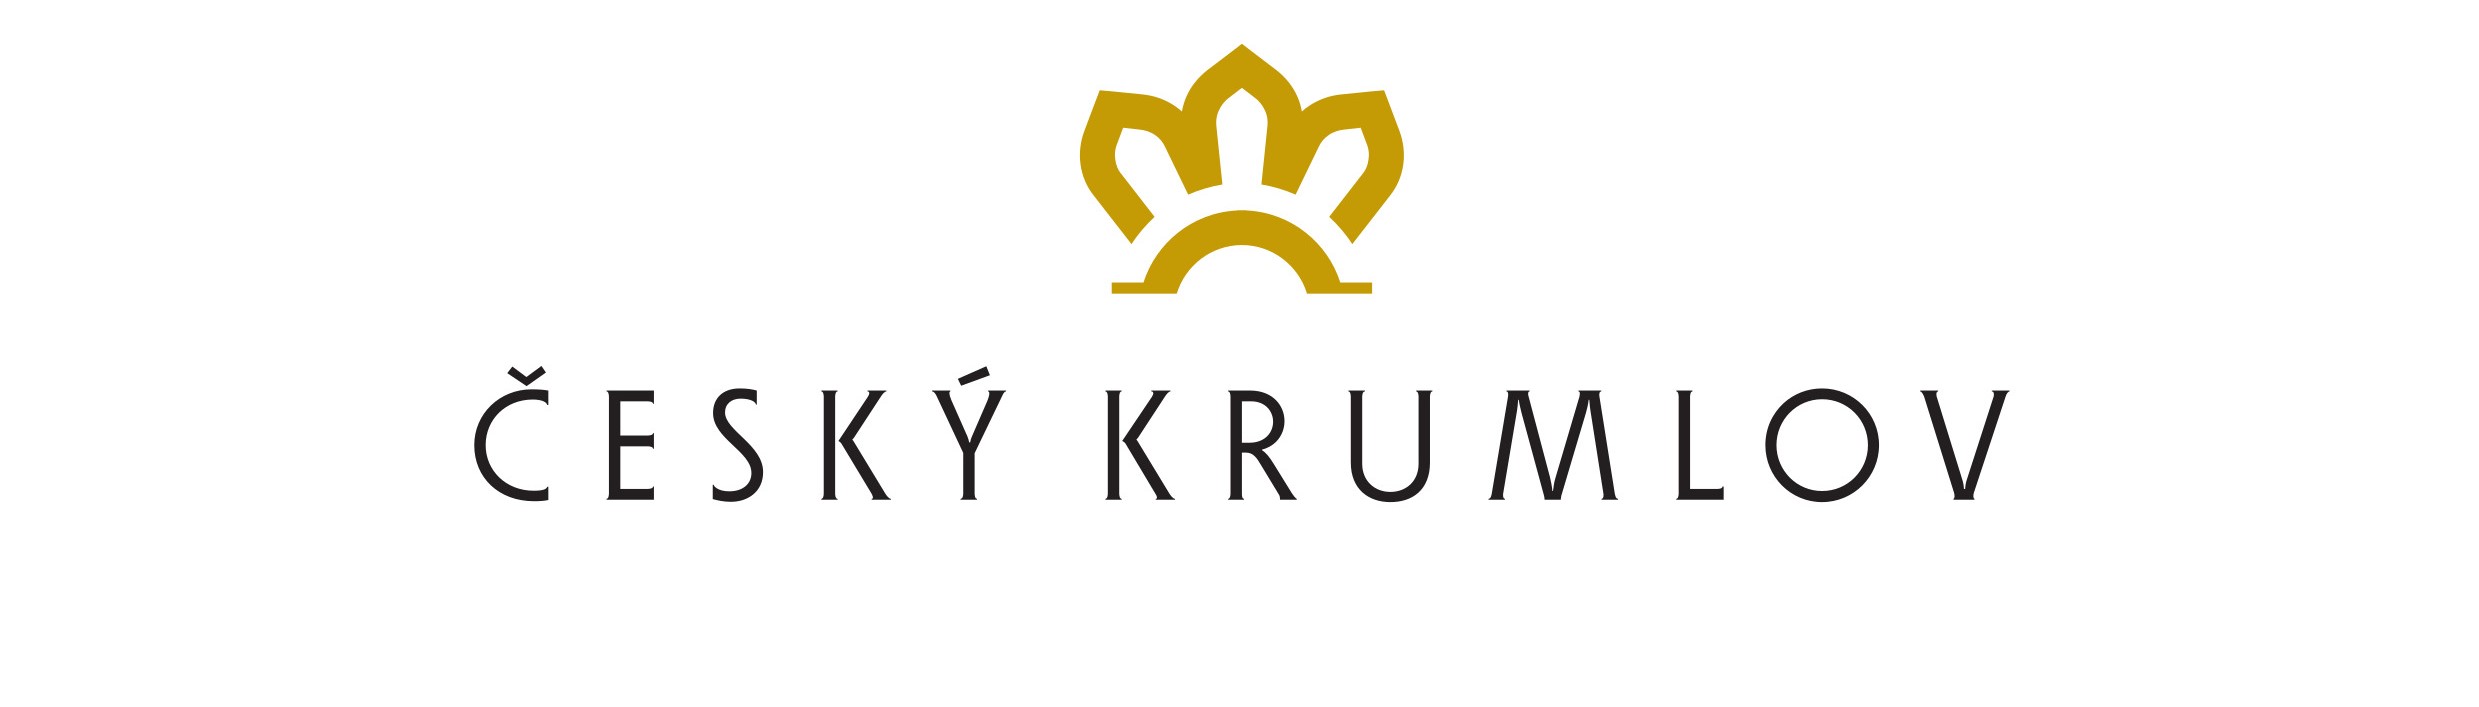 Ck_logo